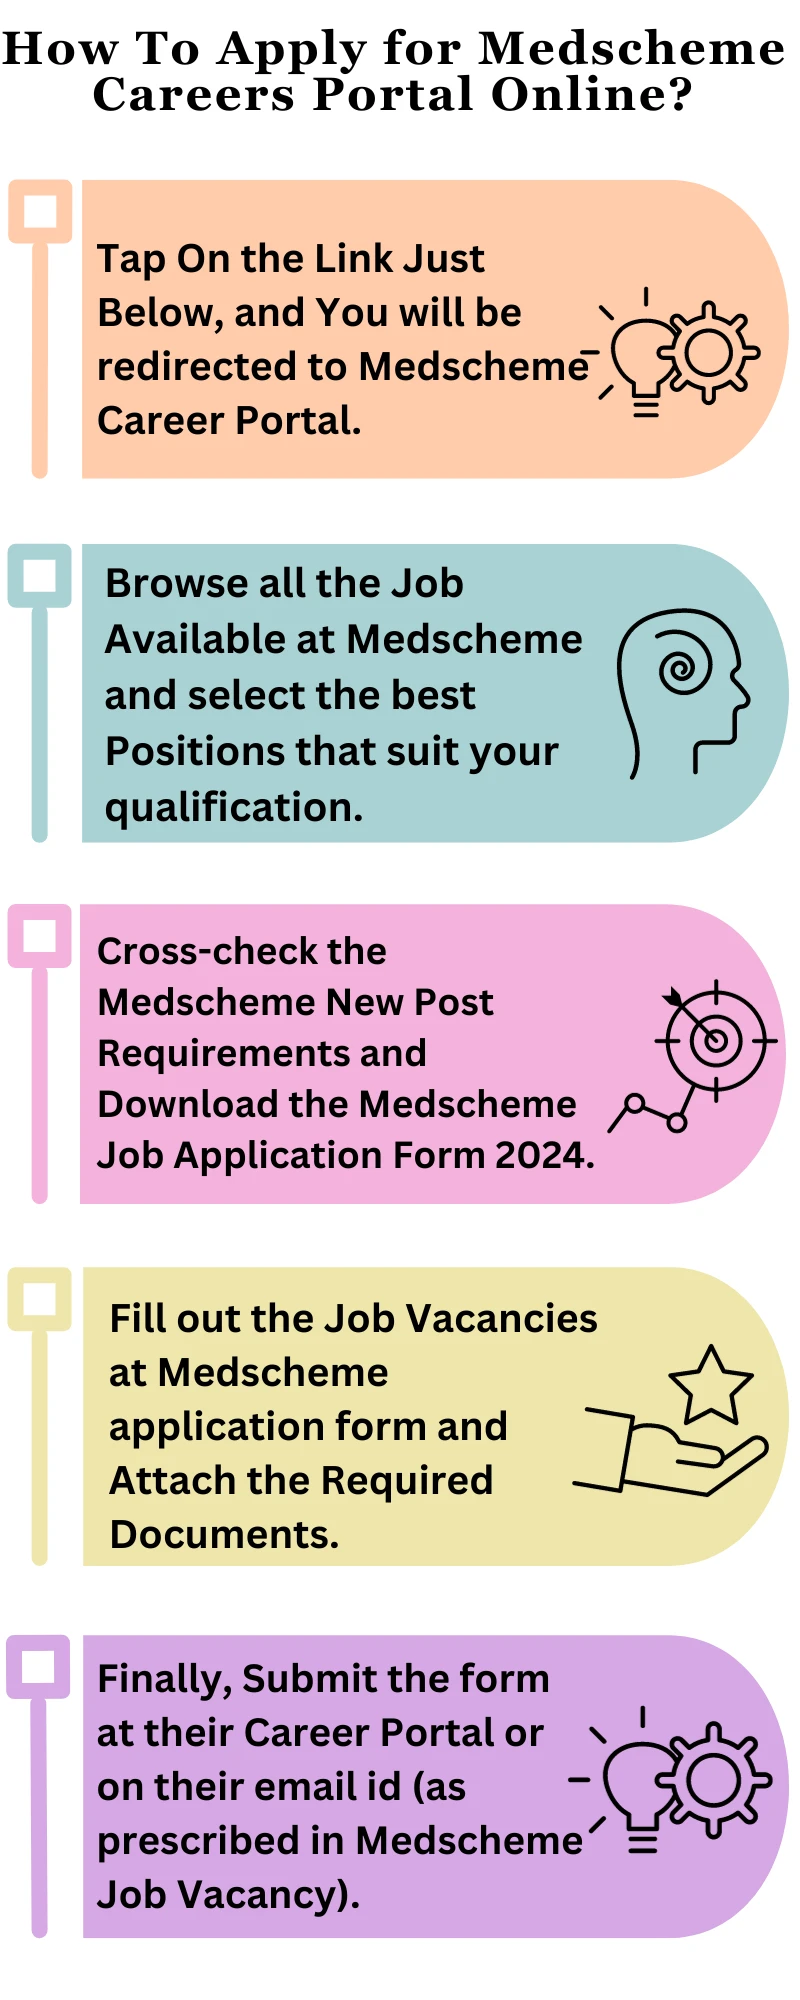 How To Apply for Medscheme Careers Portal Online?